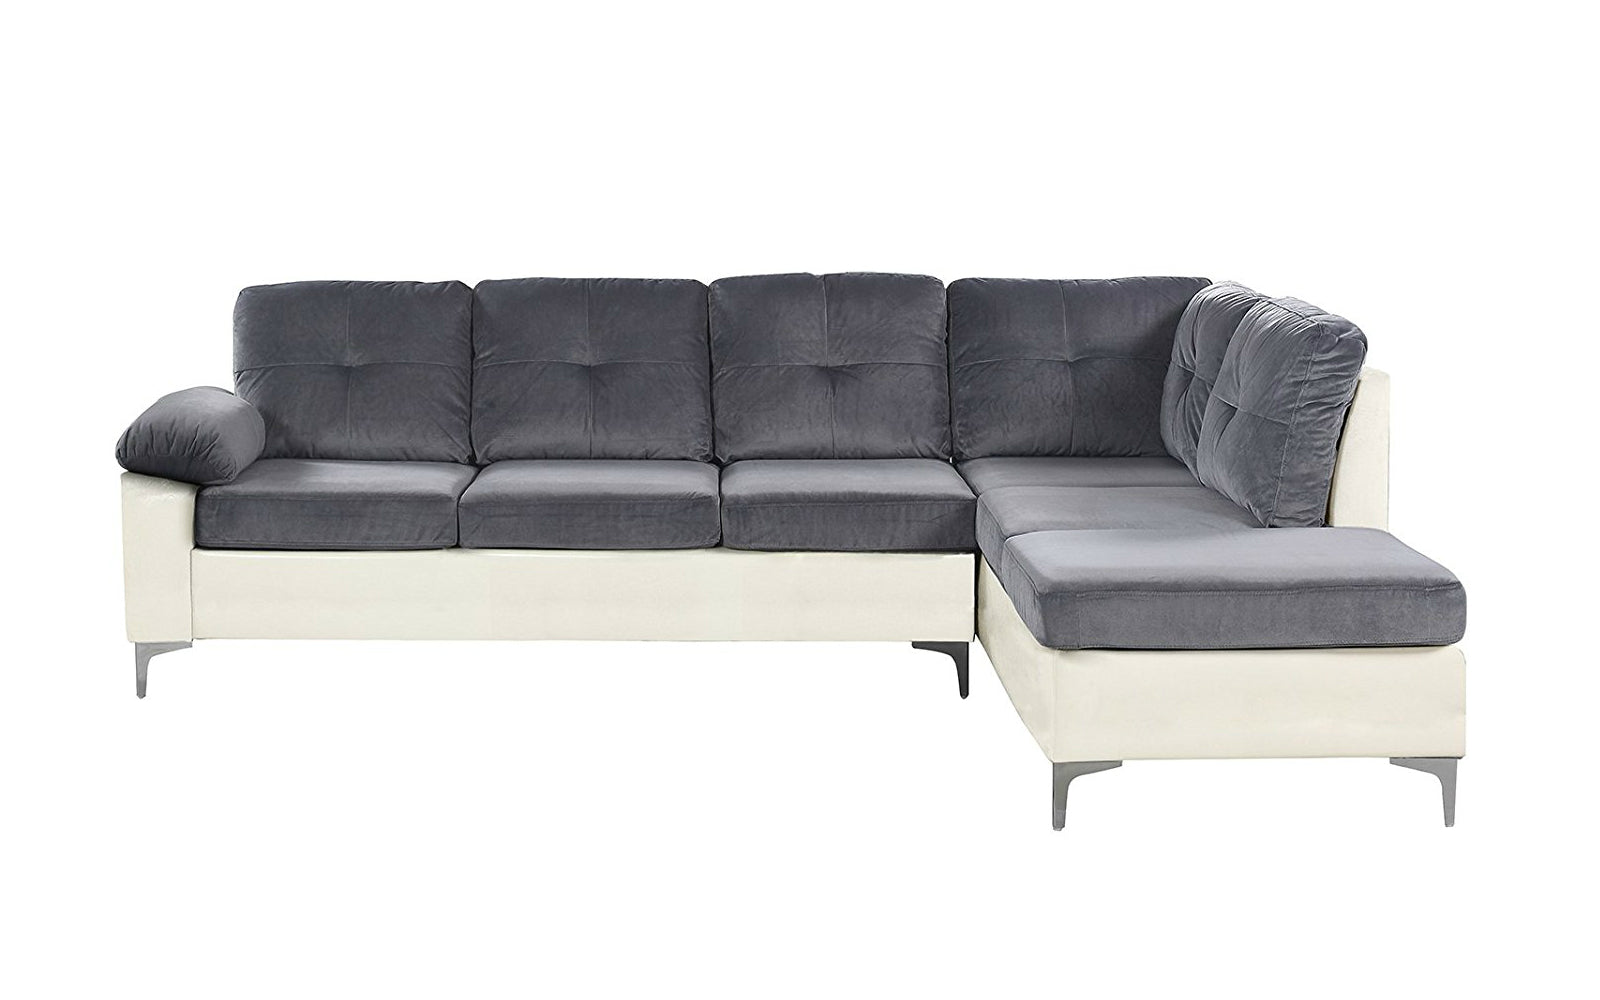 Helsinki Modern Tufted Brush Microfiber & Faux Leather Sectional Sofa